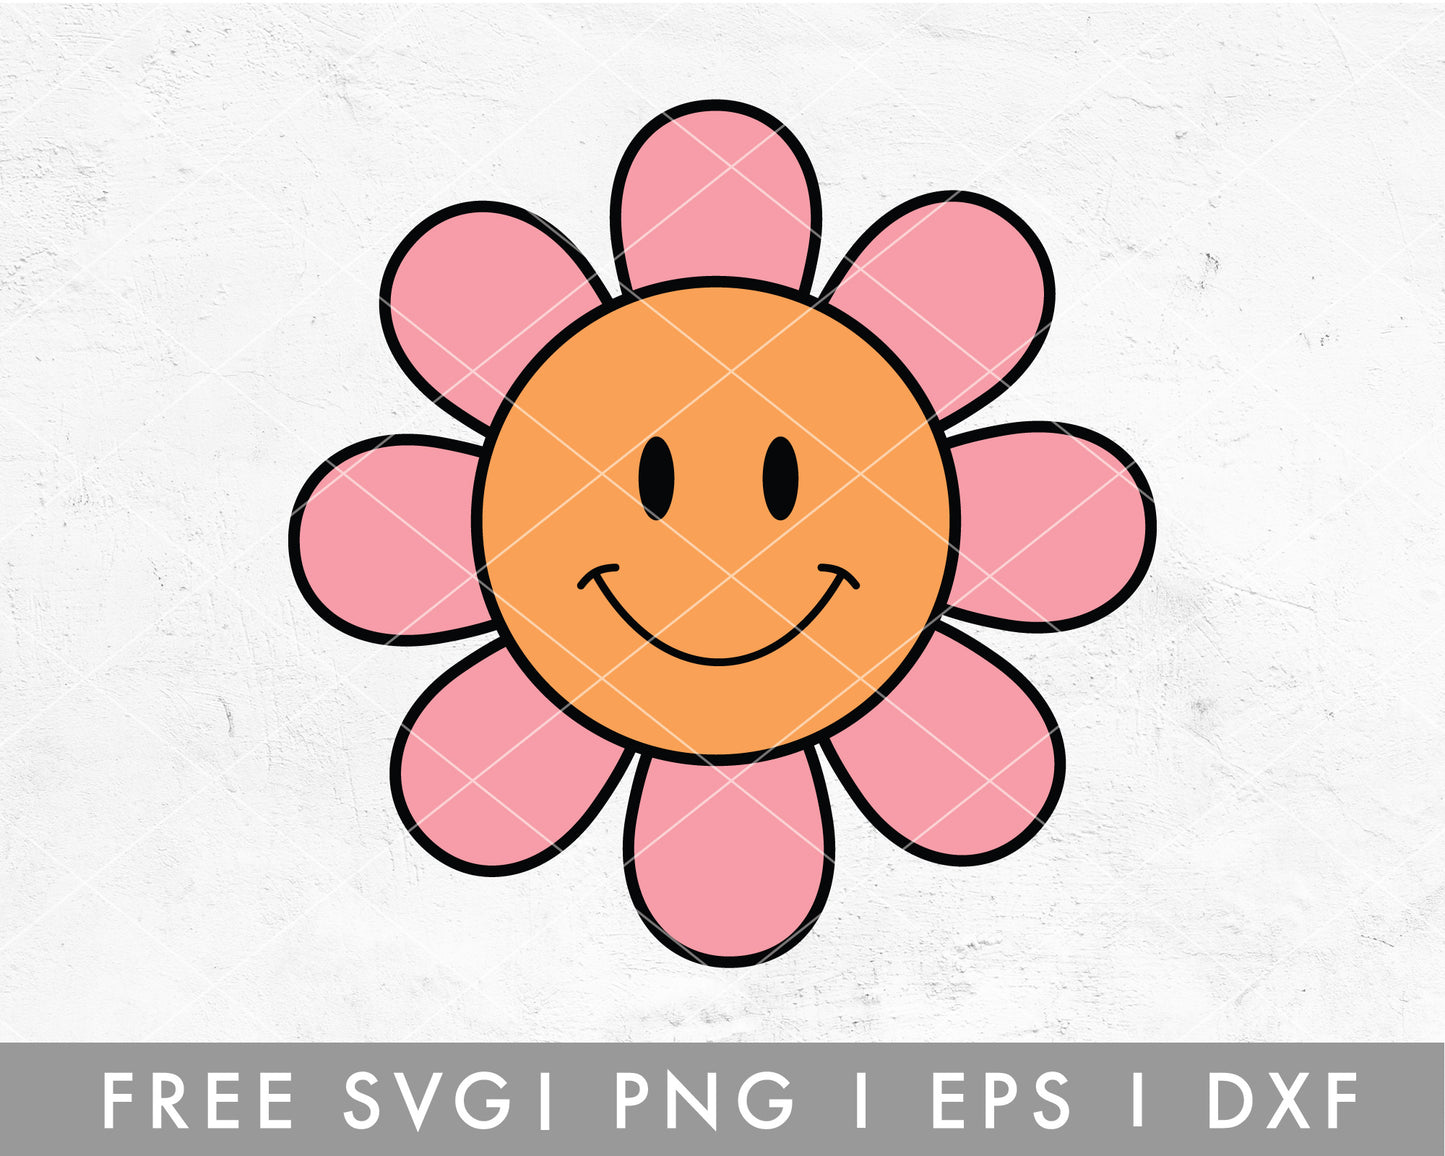 FREE Retro Smiley Flower SVG